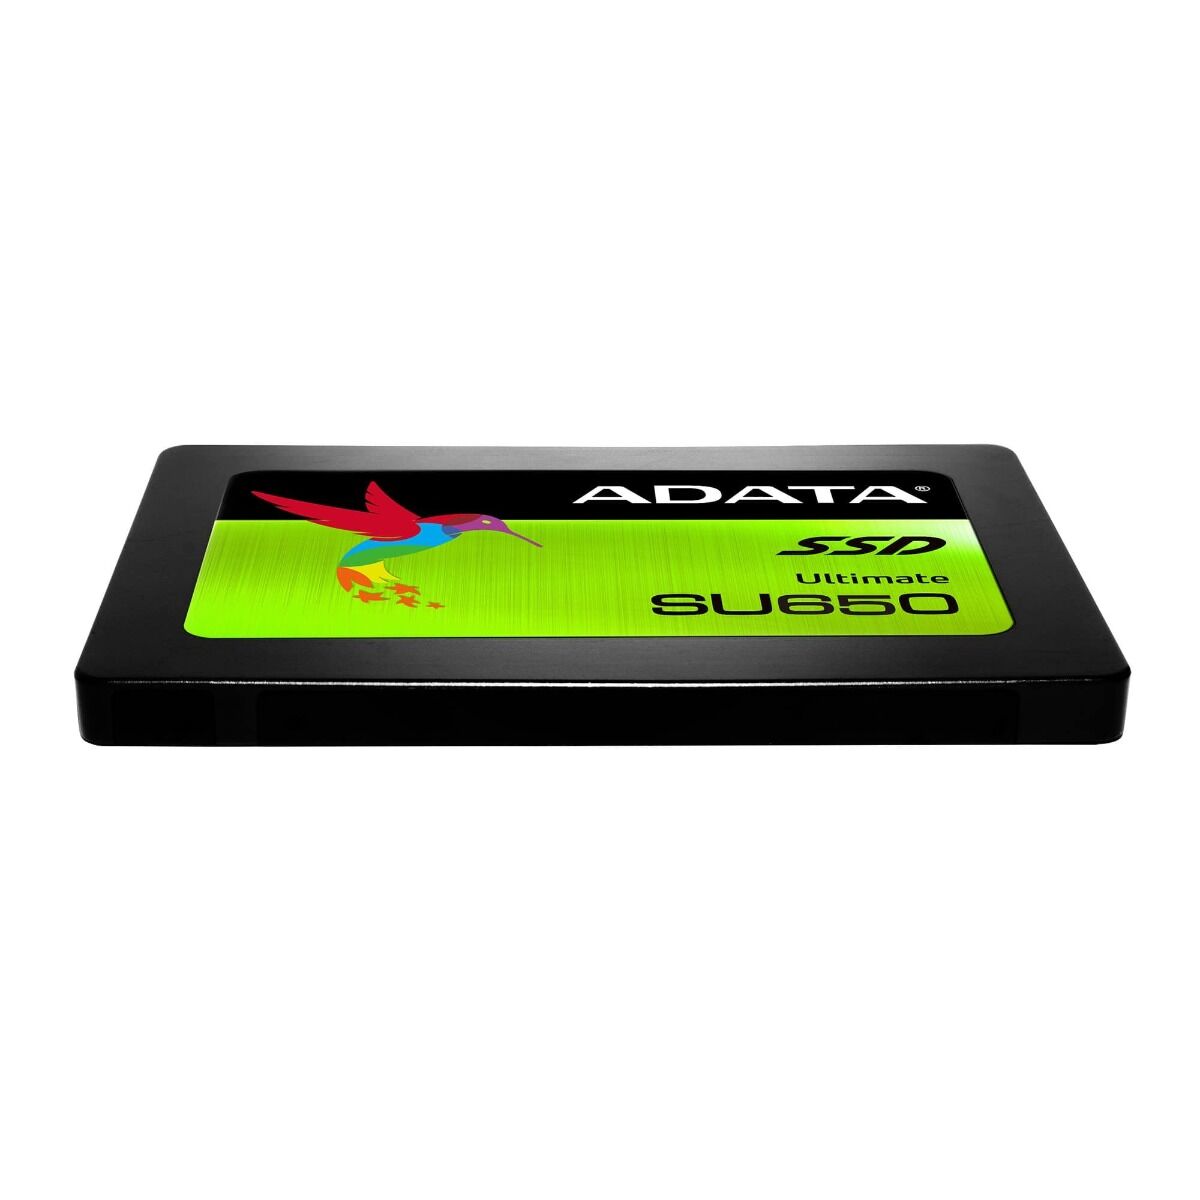 SSD Adata Ultimate SU650 240GB SATA-III 2.5 inch